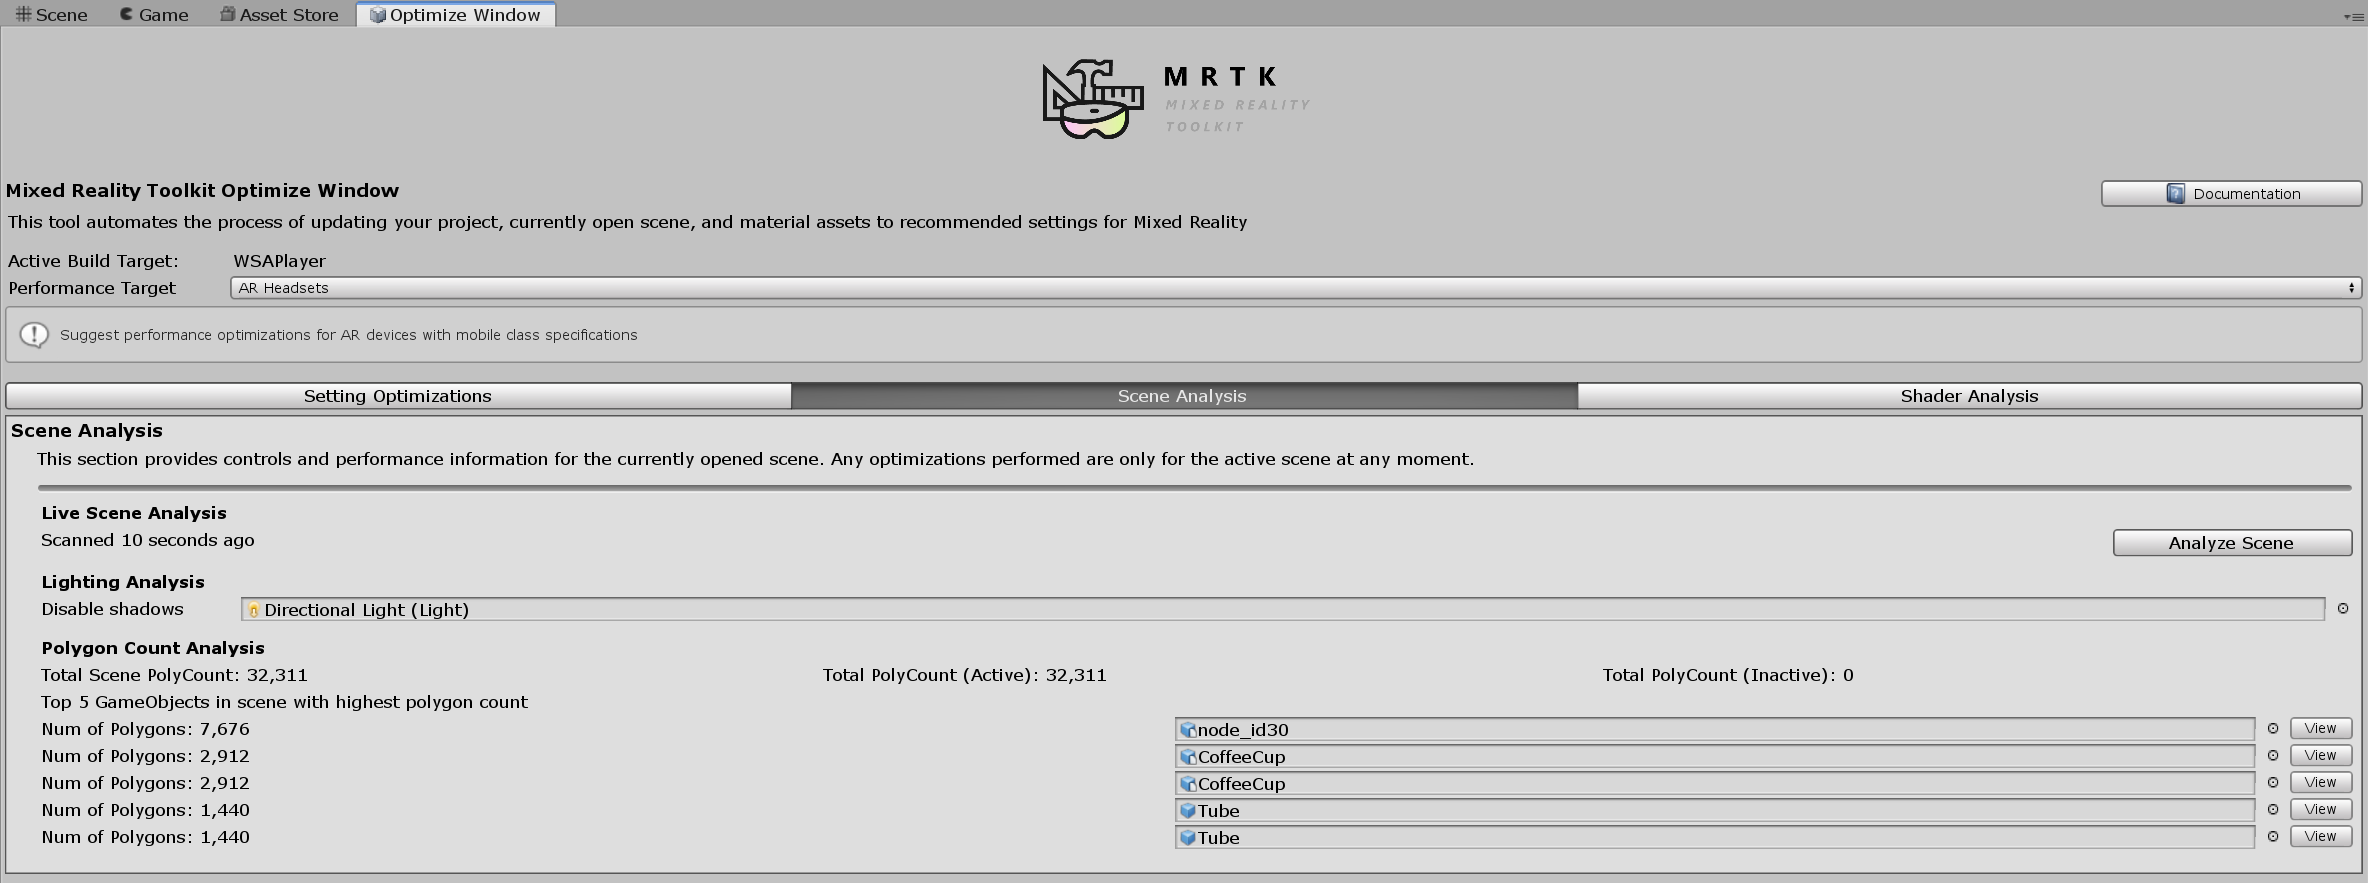 MRTK Optimize Window Settings